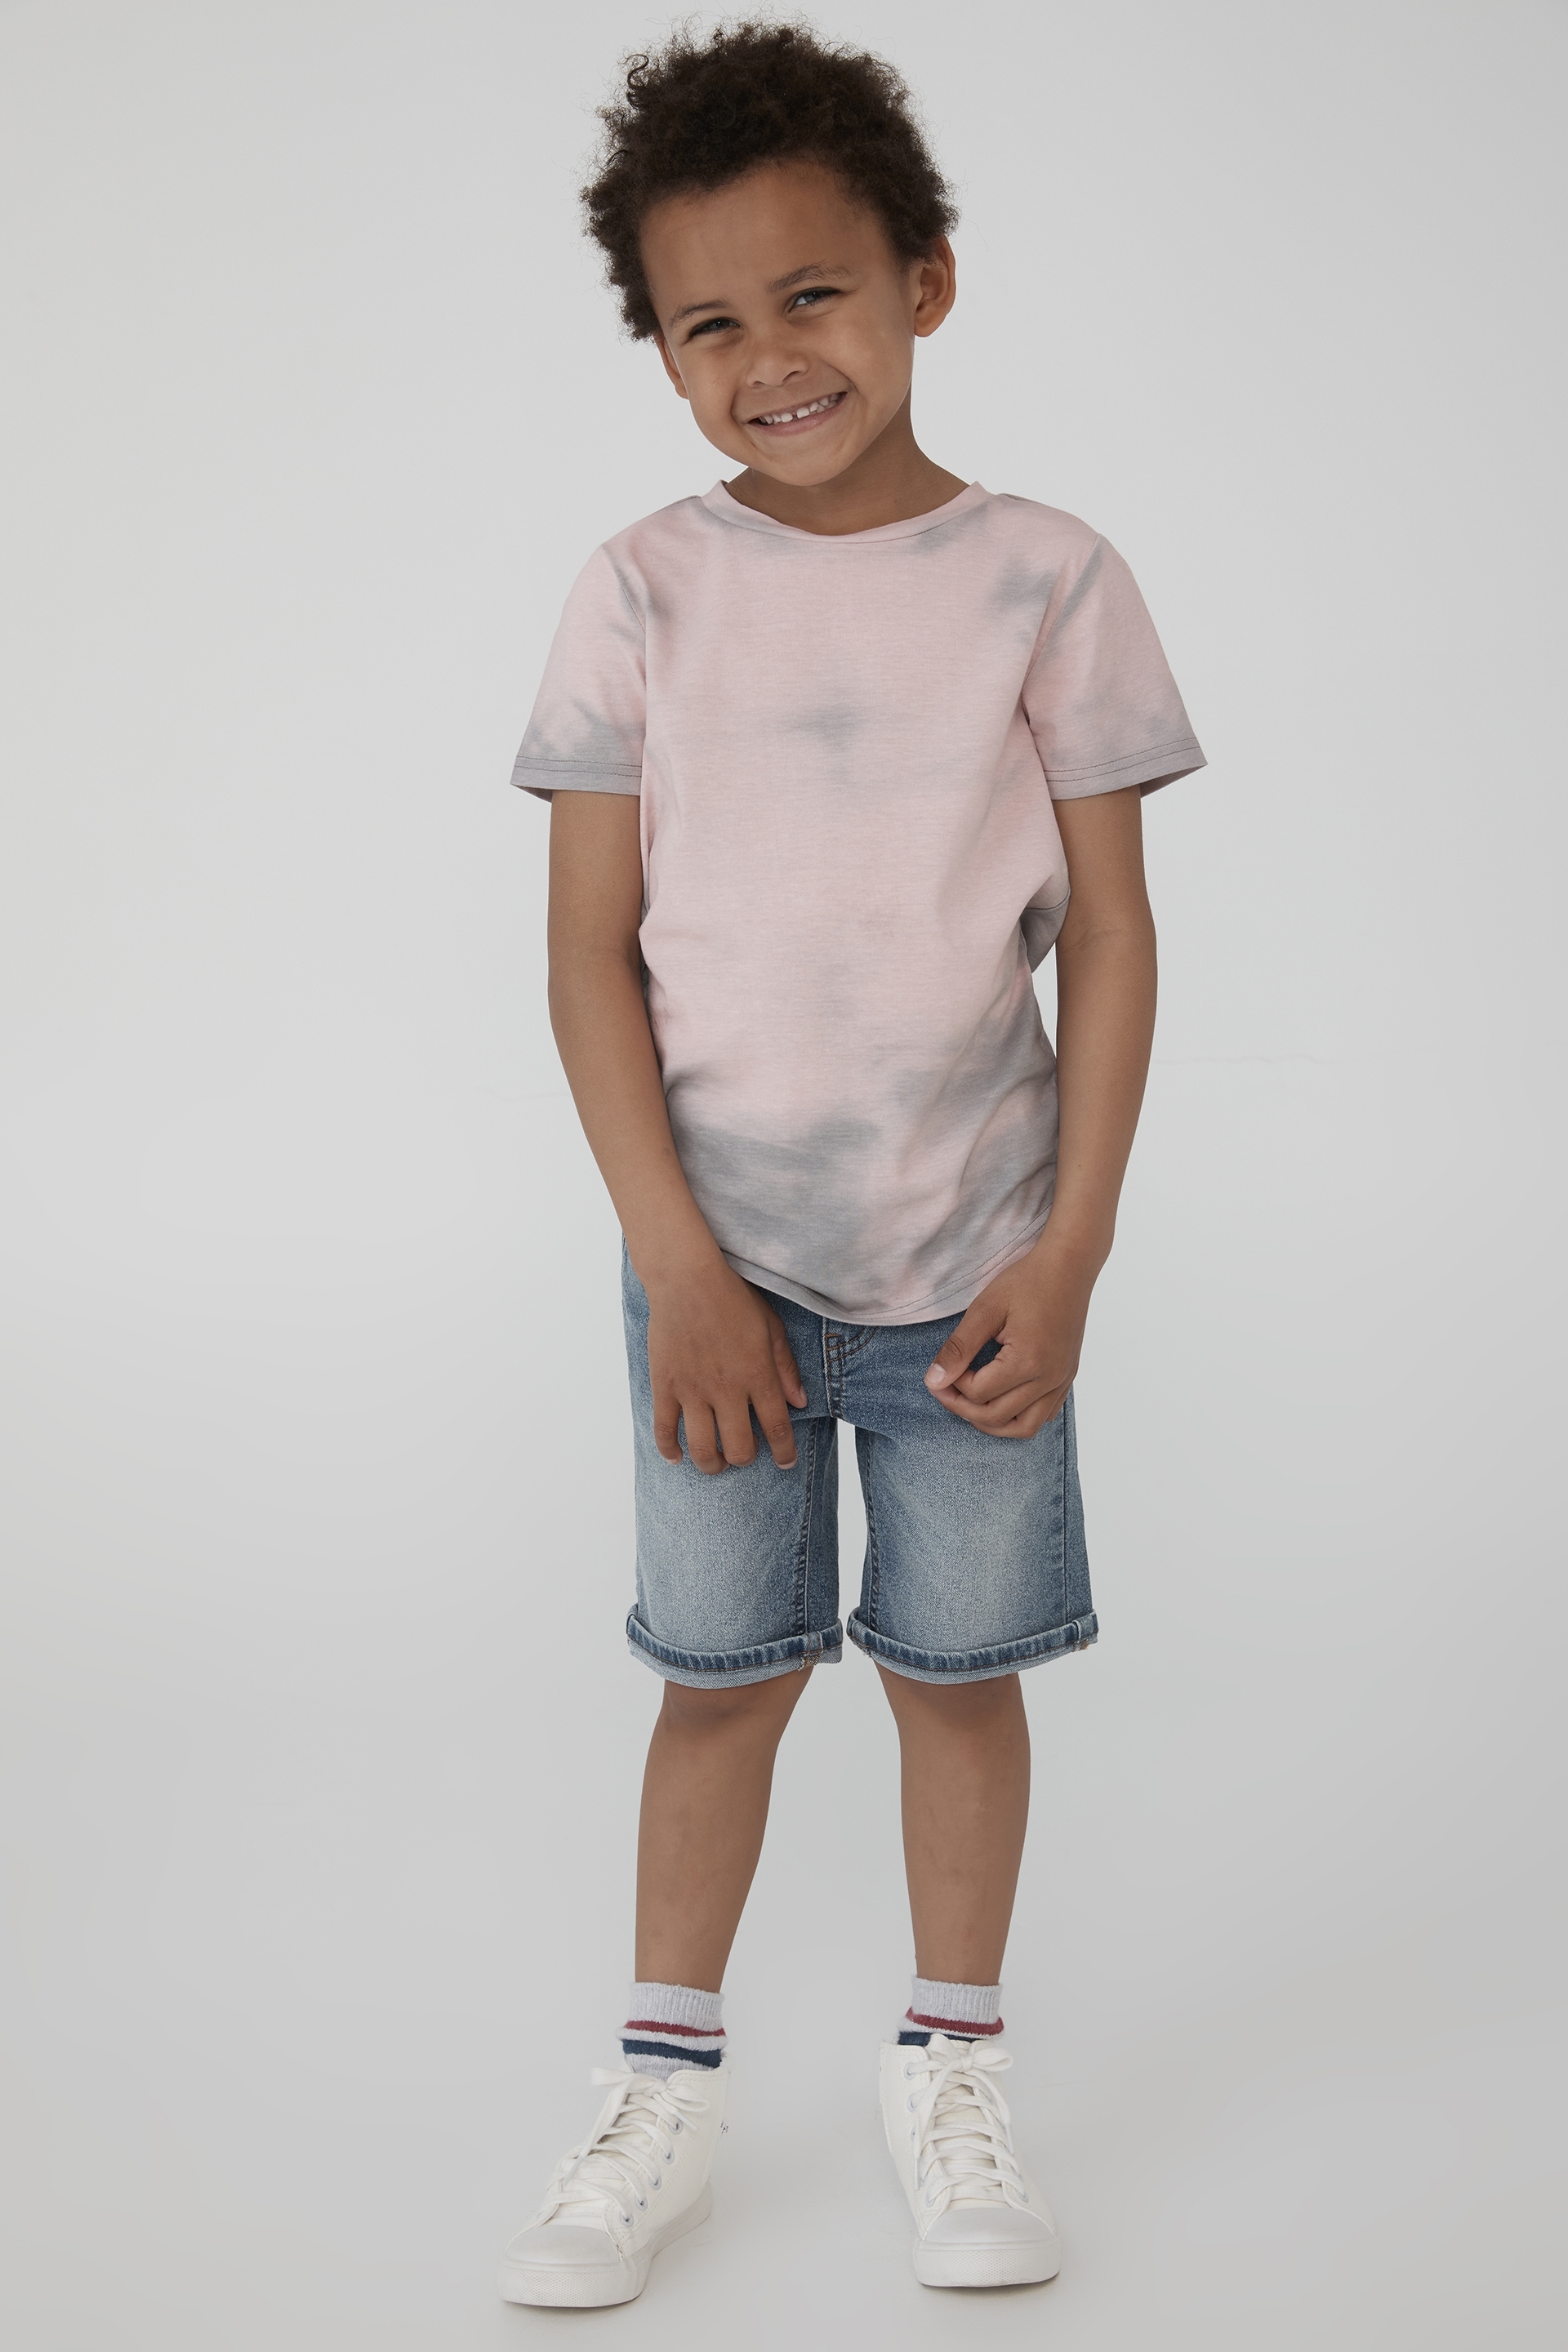 Cotton On Kids - Colour Changing Cruz Short Sleeve Tee - Steel / colour change